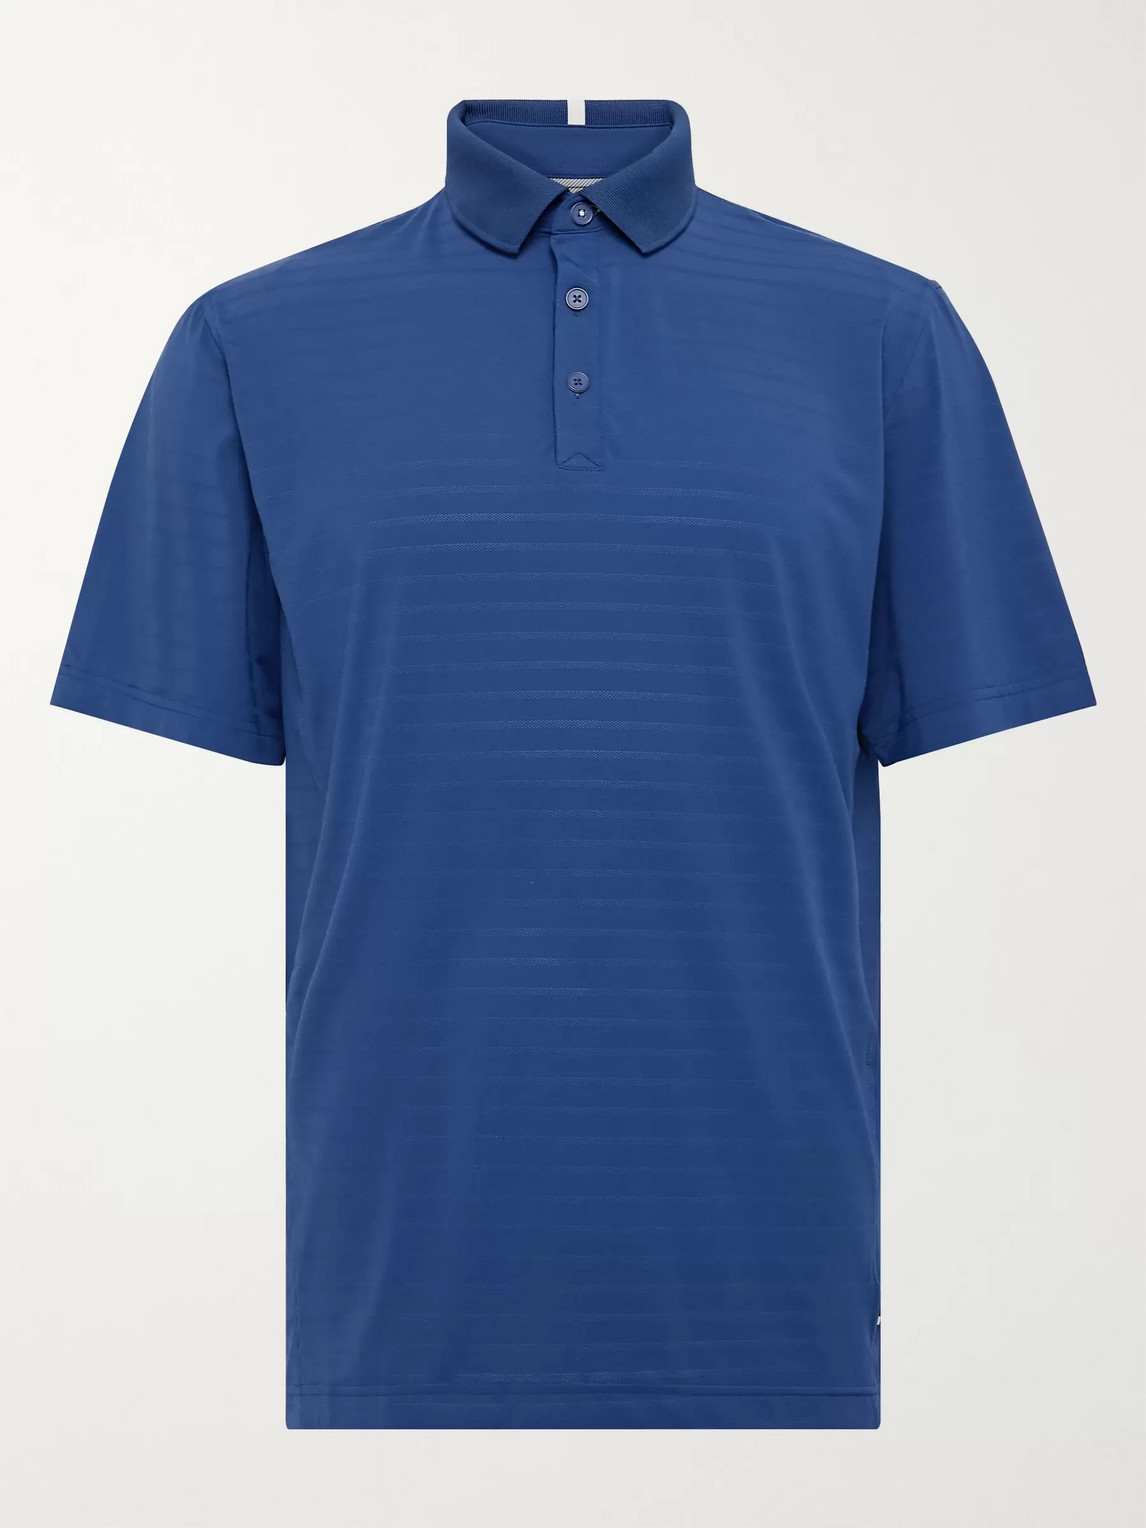 Adidas Golf Adipure Premium Performance Striped Stretch-jersey Golf Polo Shirt In Blue